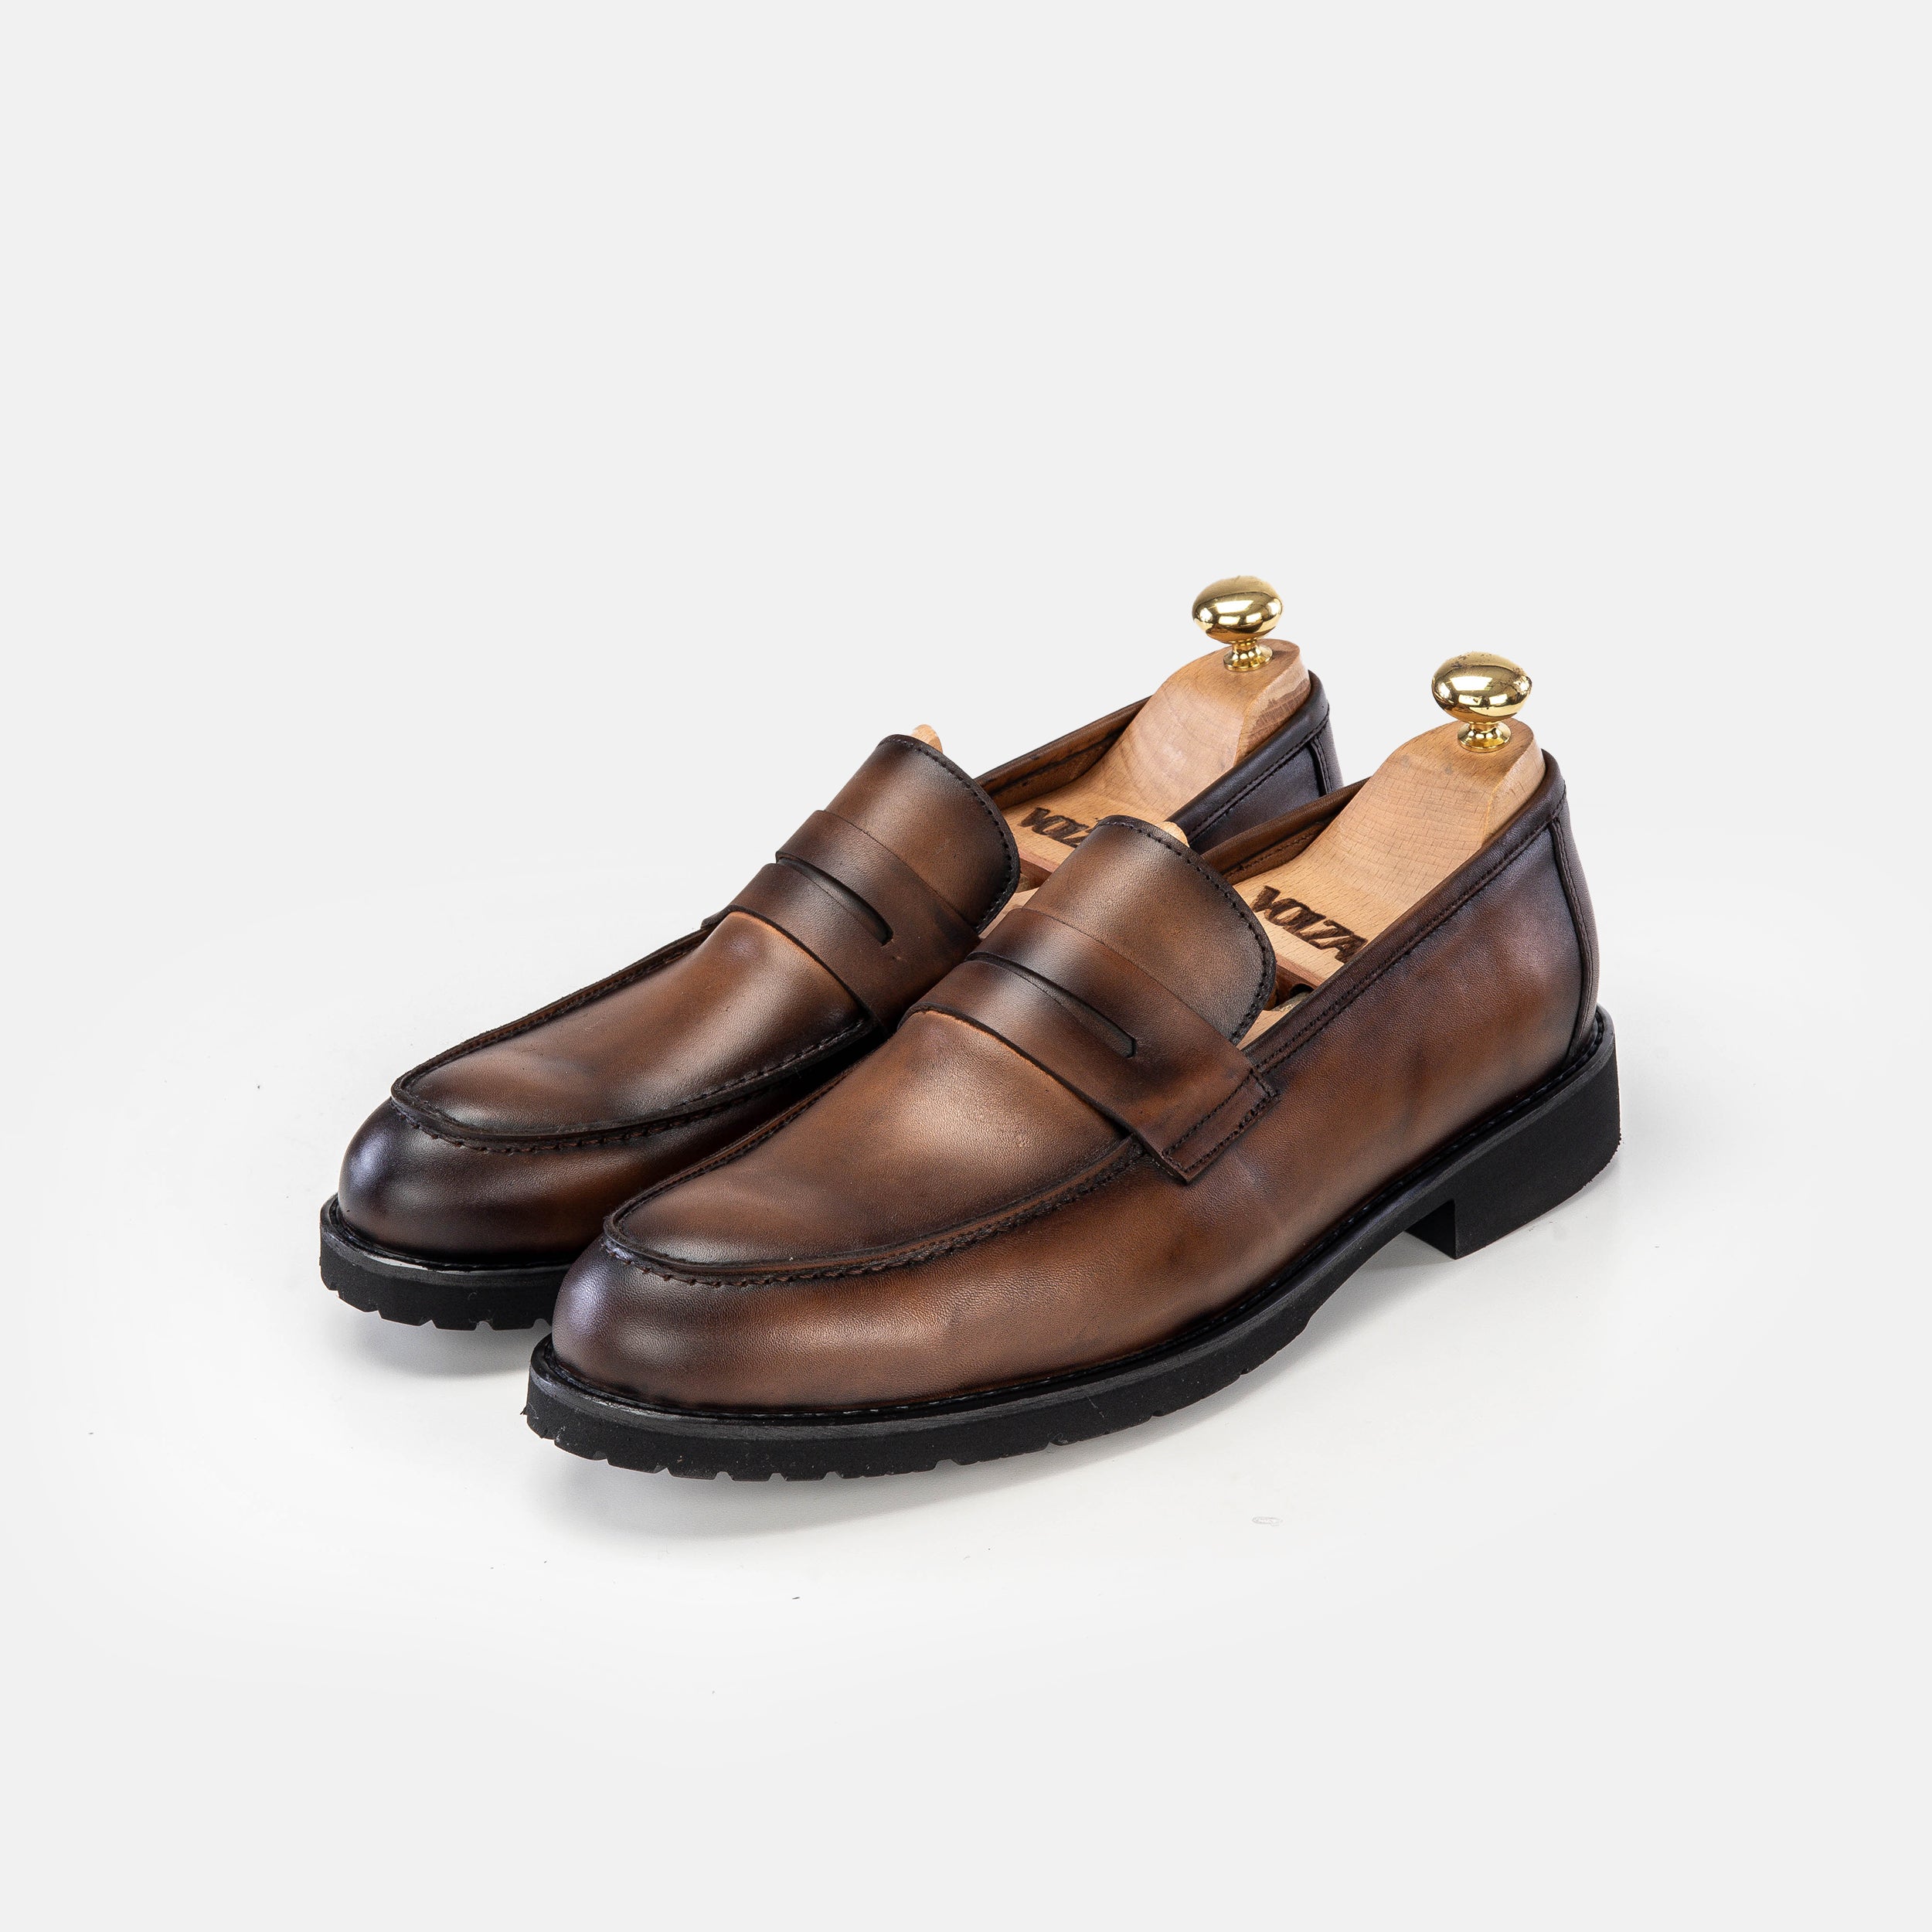 '''5164 chaussure en cuir marron vintage